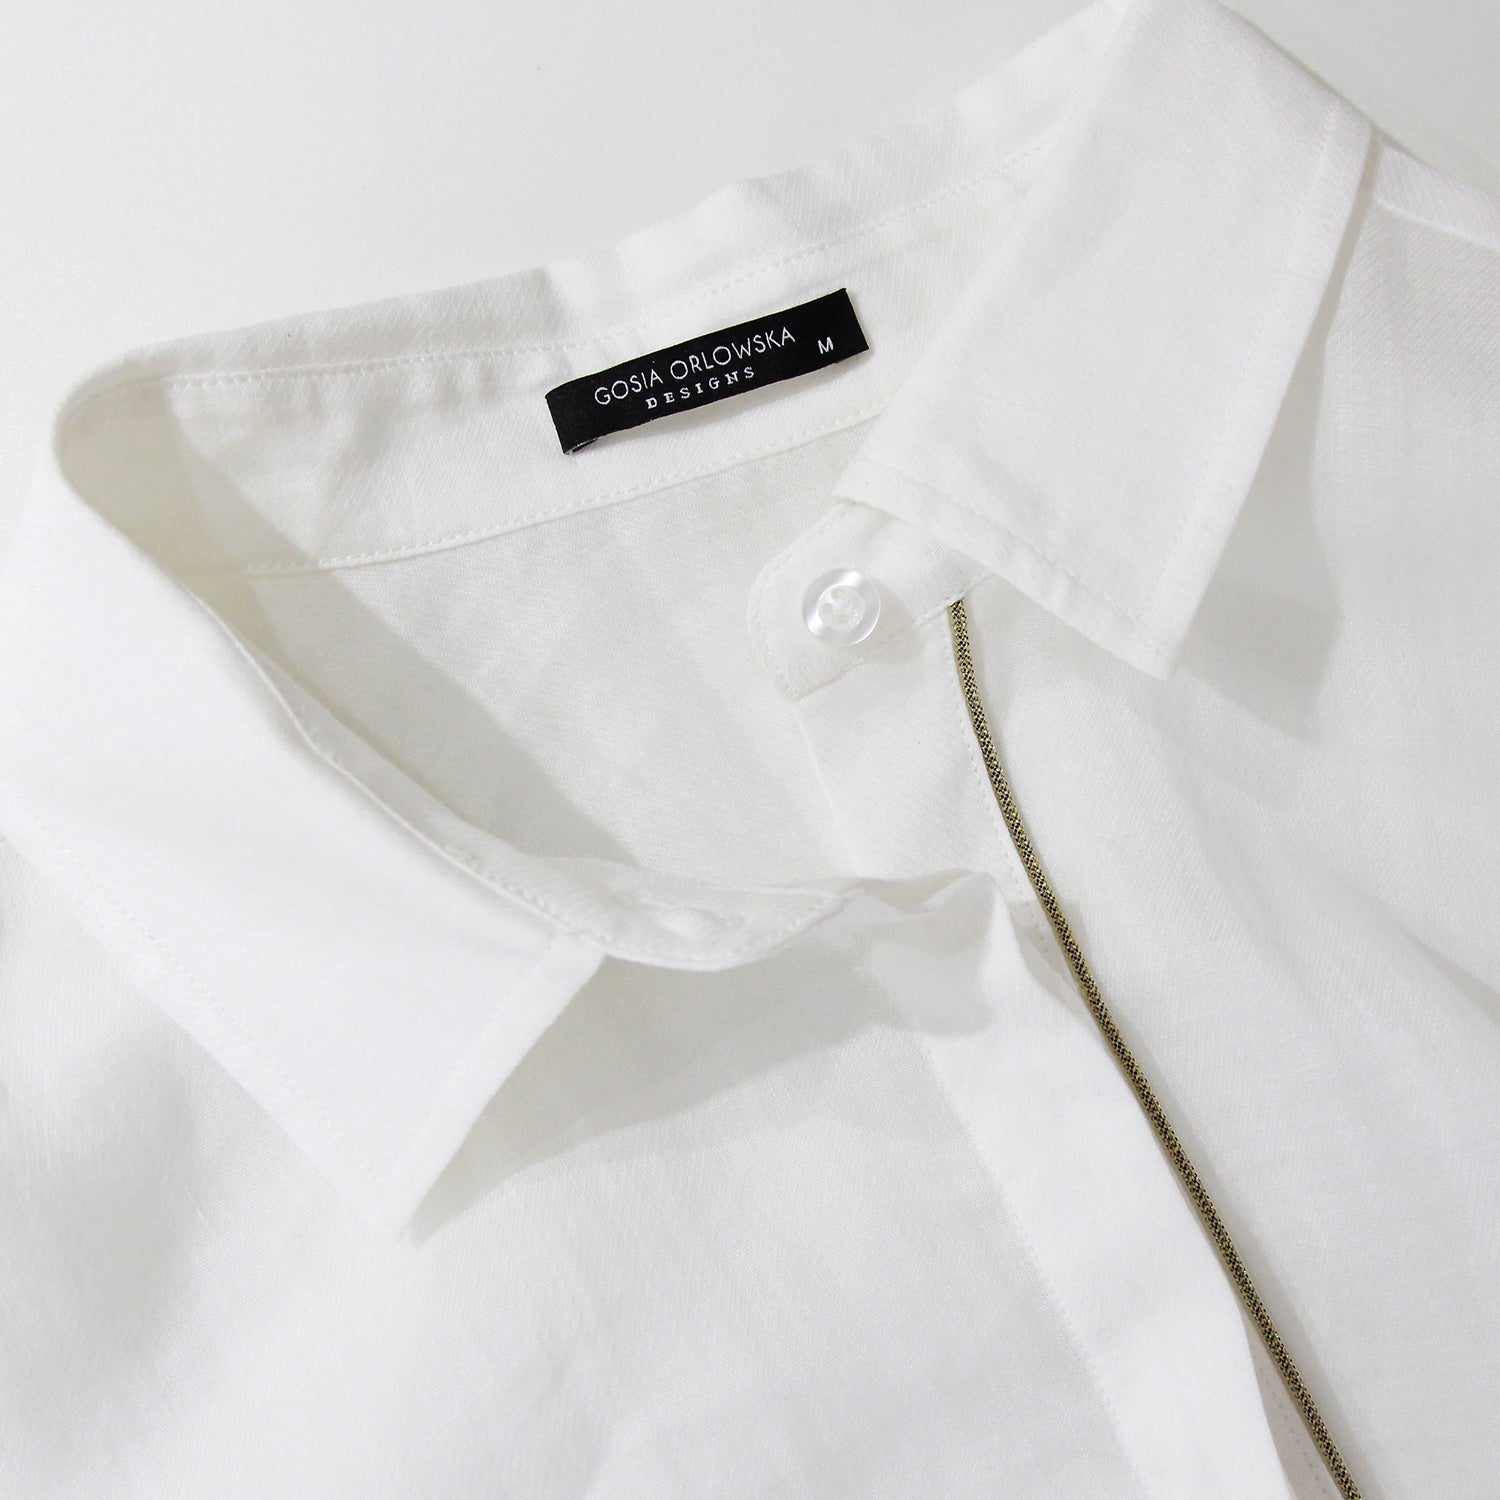 Shop Gosia Orlowska's JODIE Linenshirt - White